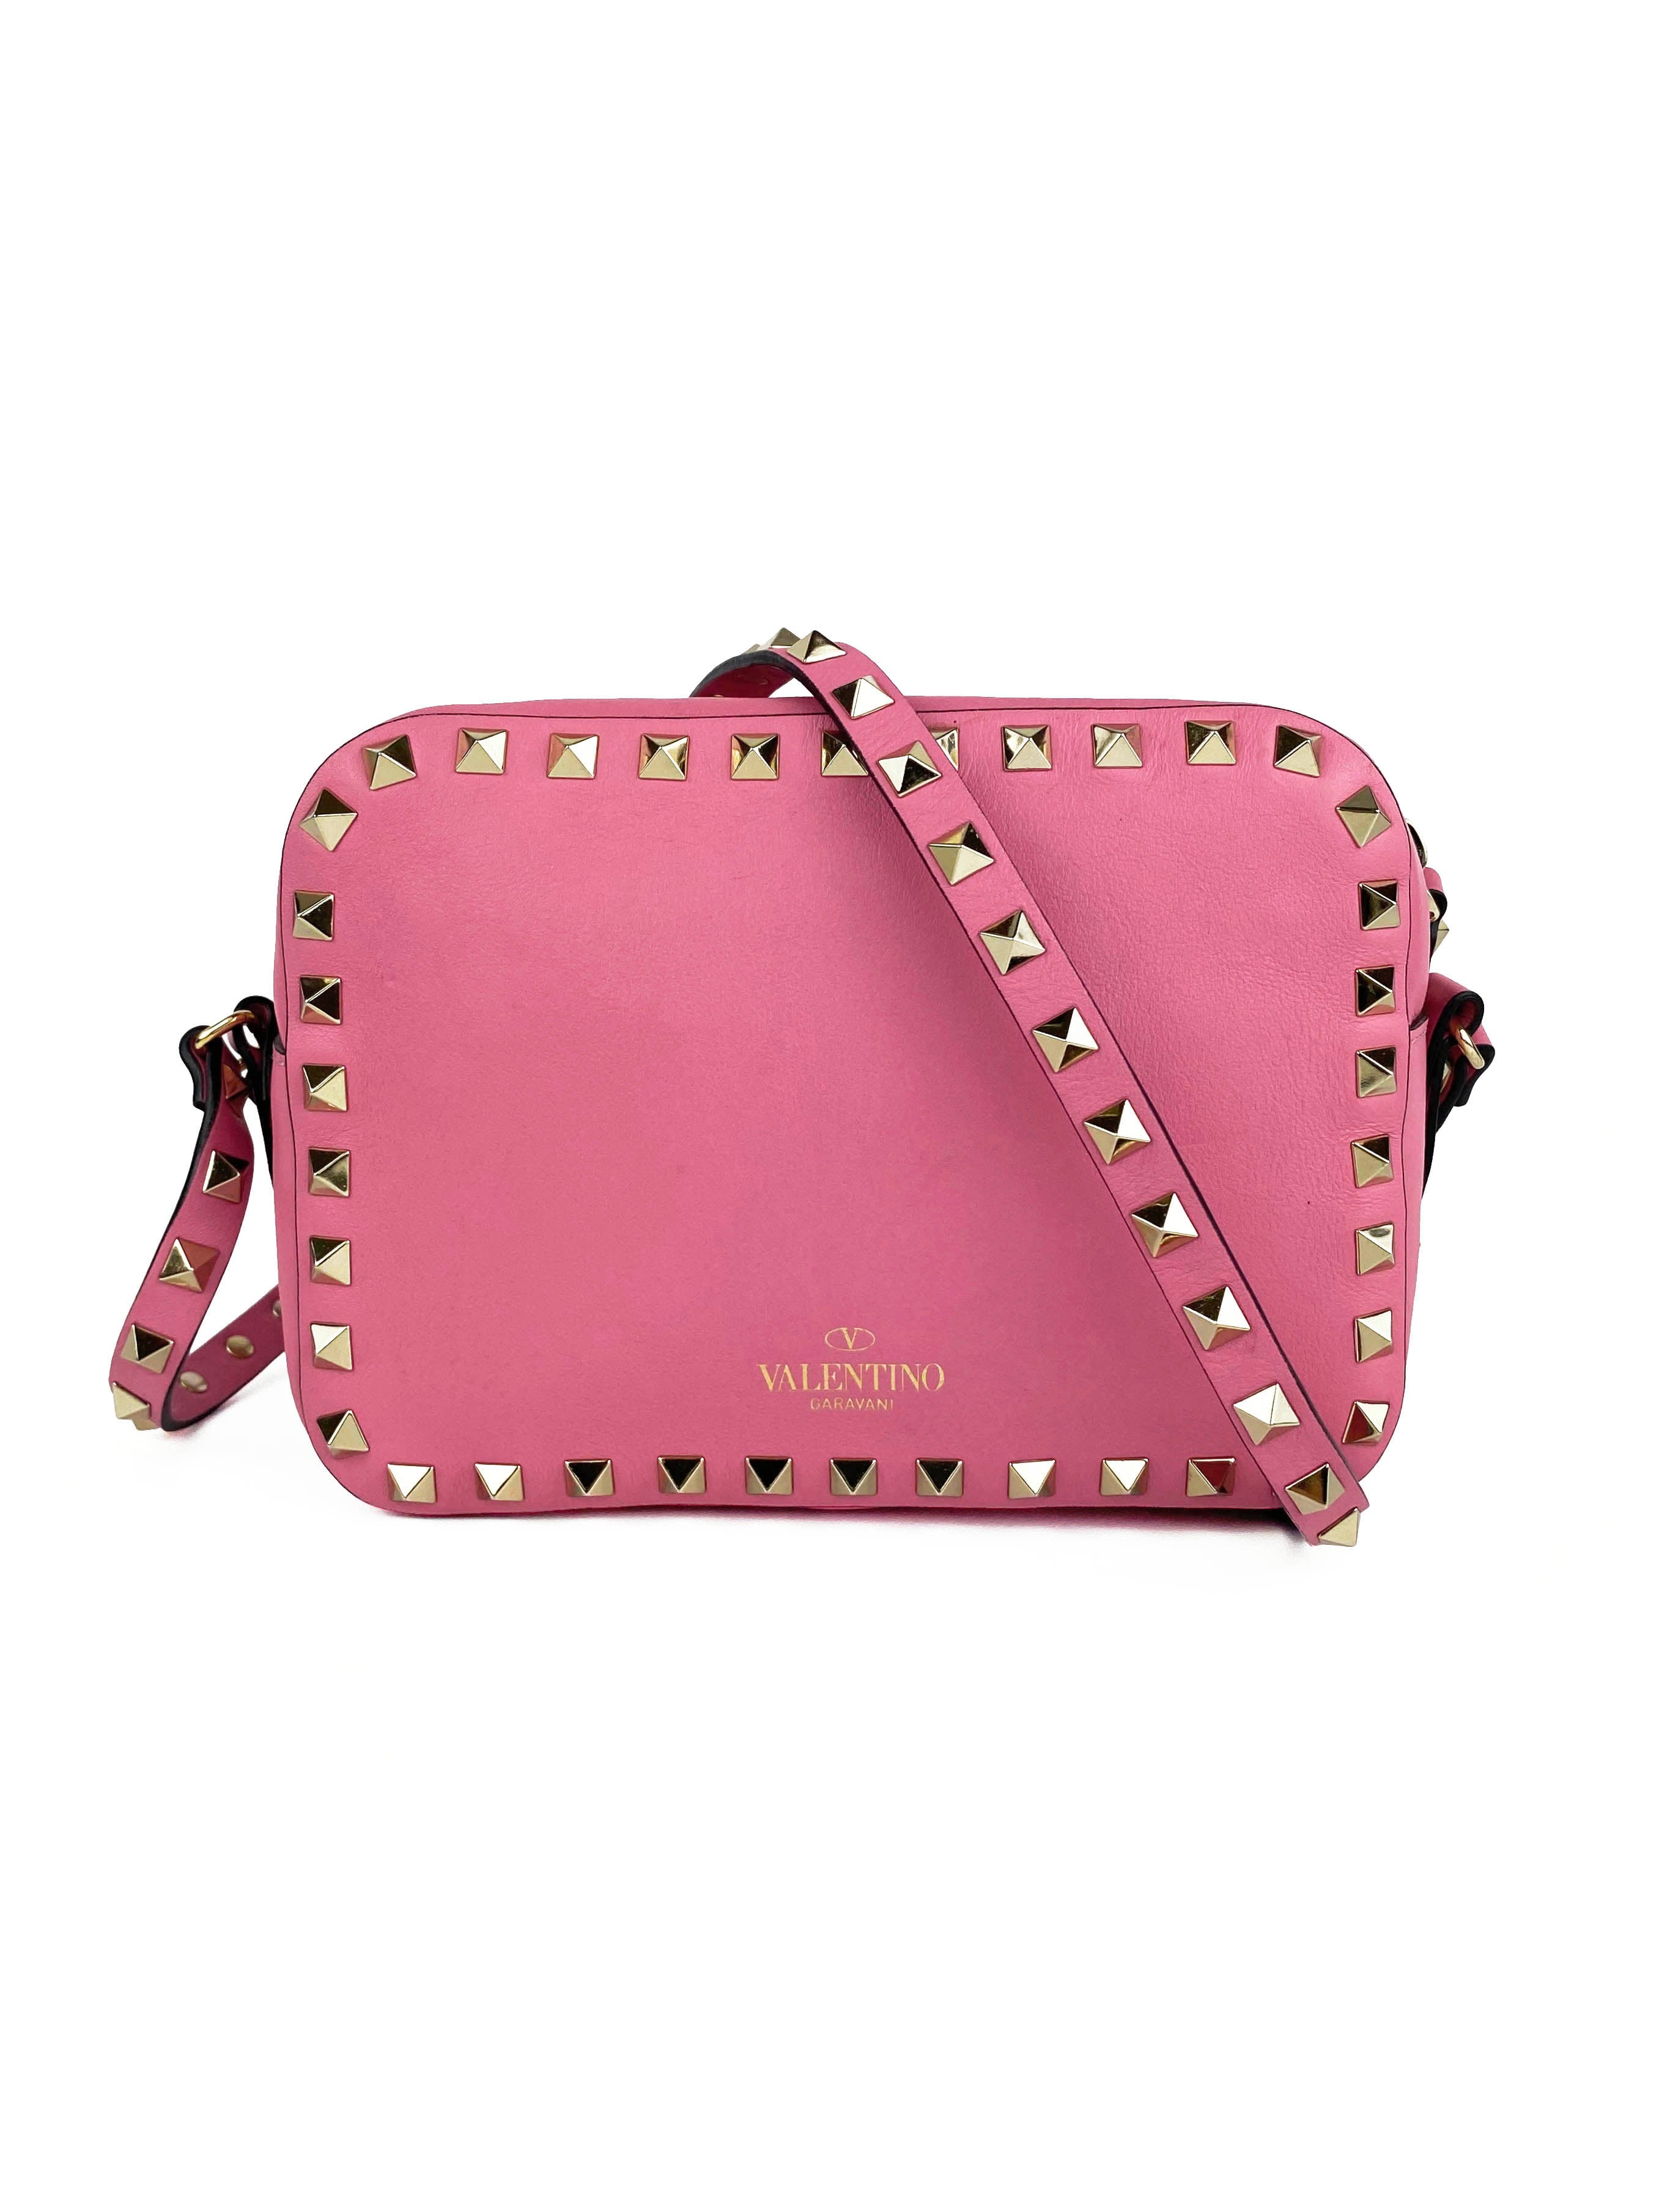 valentino-pink-rockstud-camera-bag-1_56738f9c-d2d2-4e84-9bed-a5cb2198501f.jpg